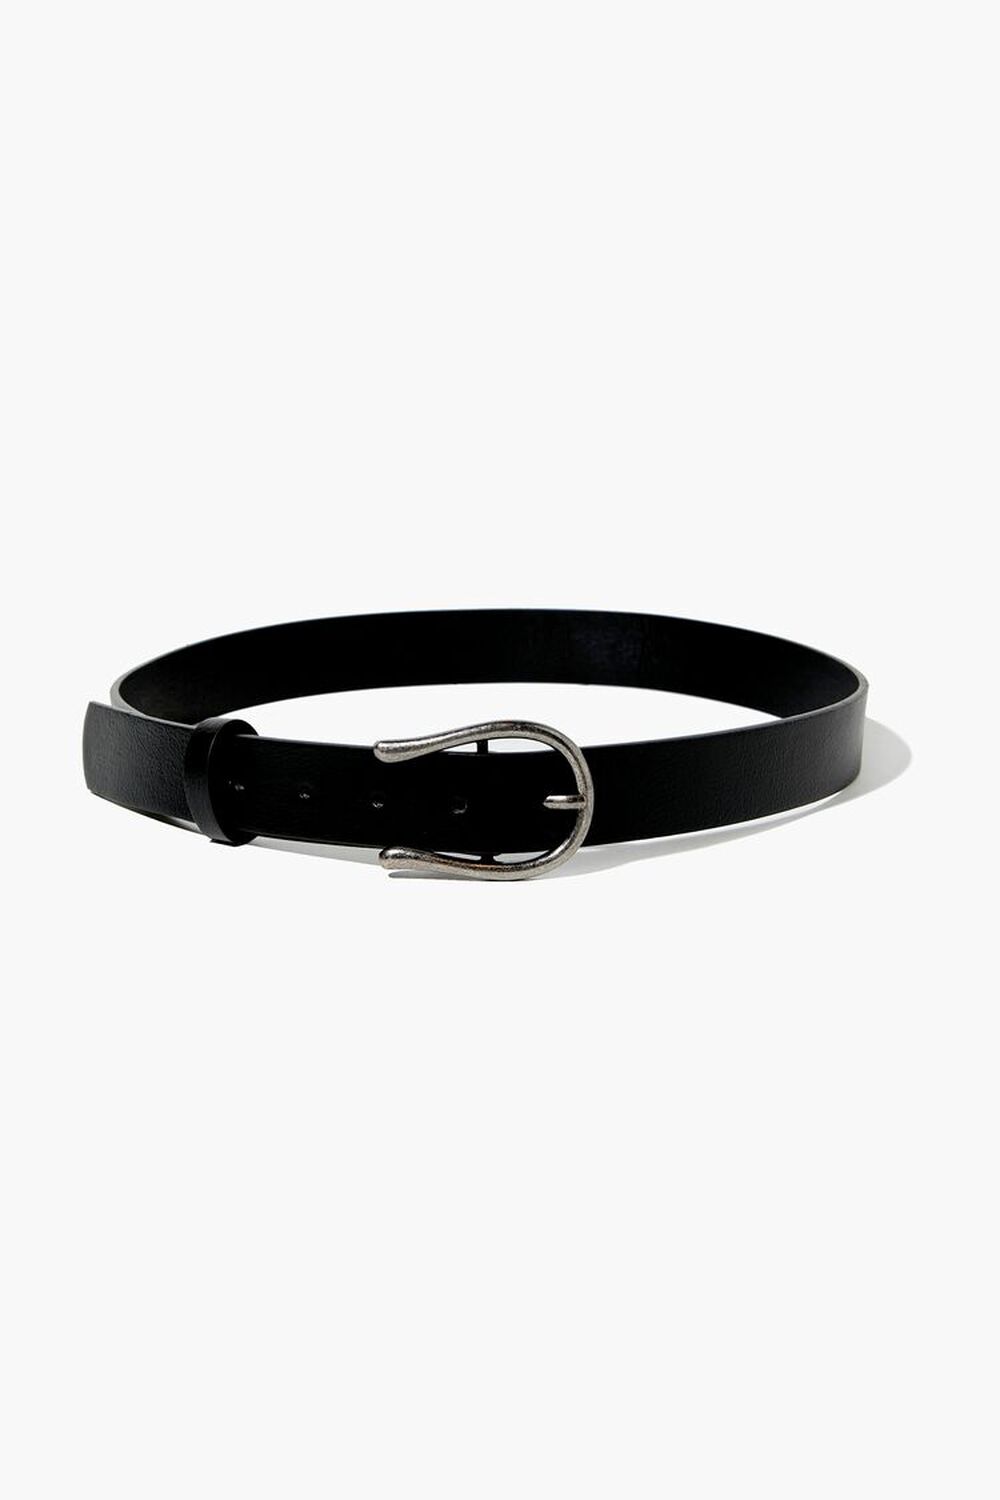 BLACK/SILVER Faux Leather Hip Belt, image 1